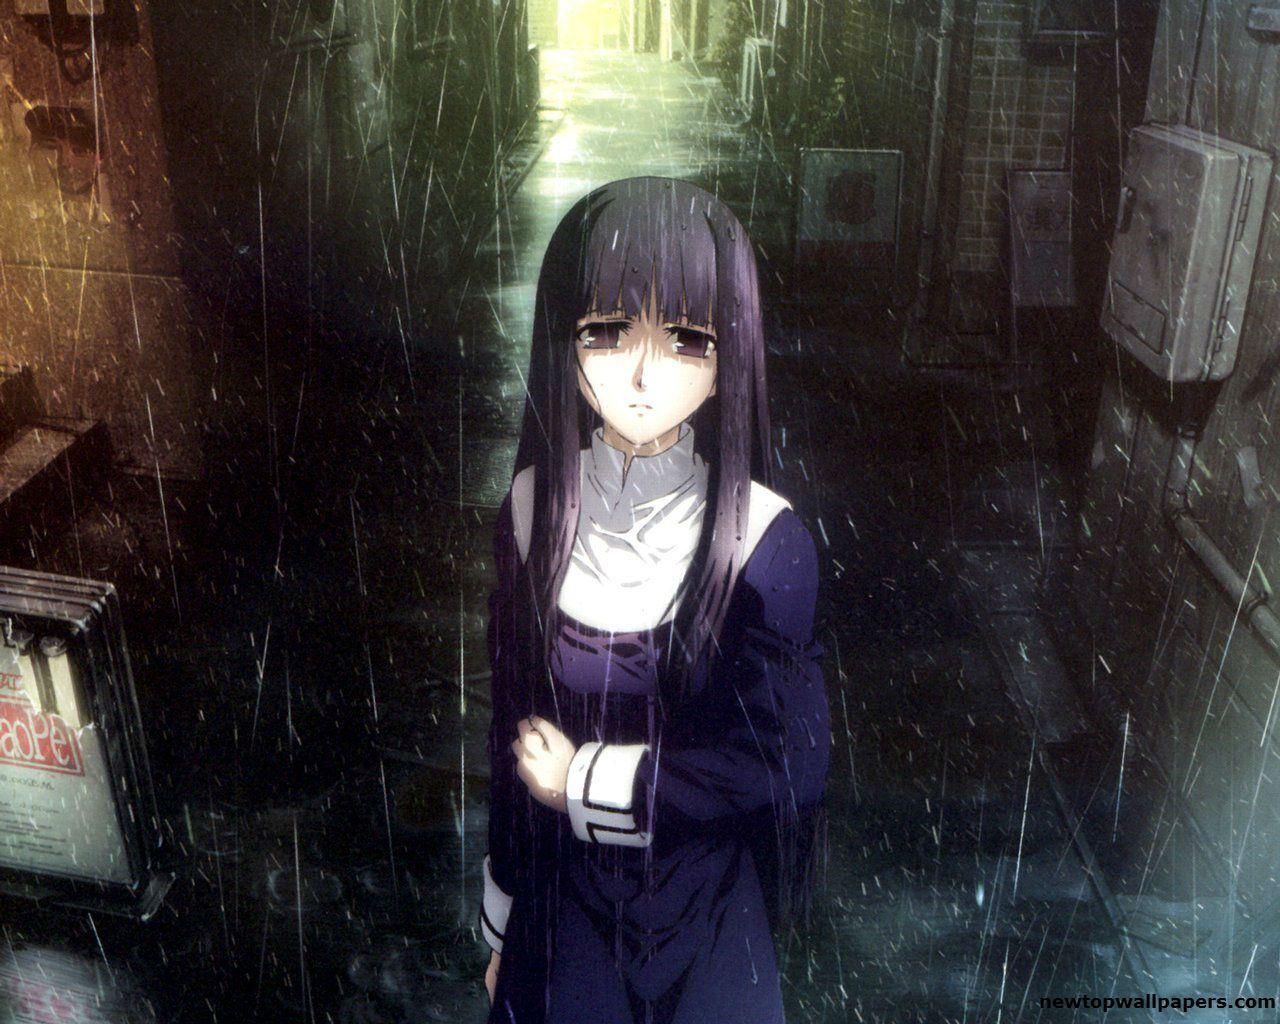 Sad Anime Girl Background Wallpaper 22151